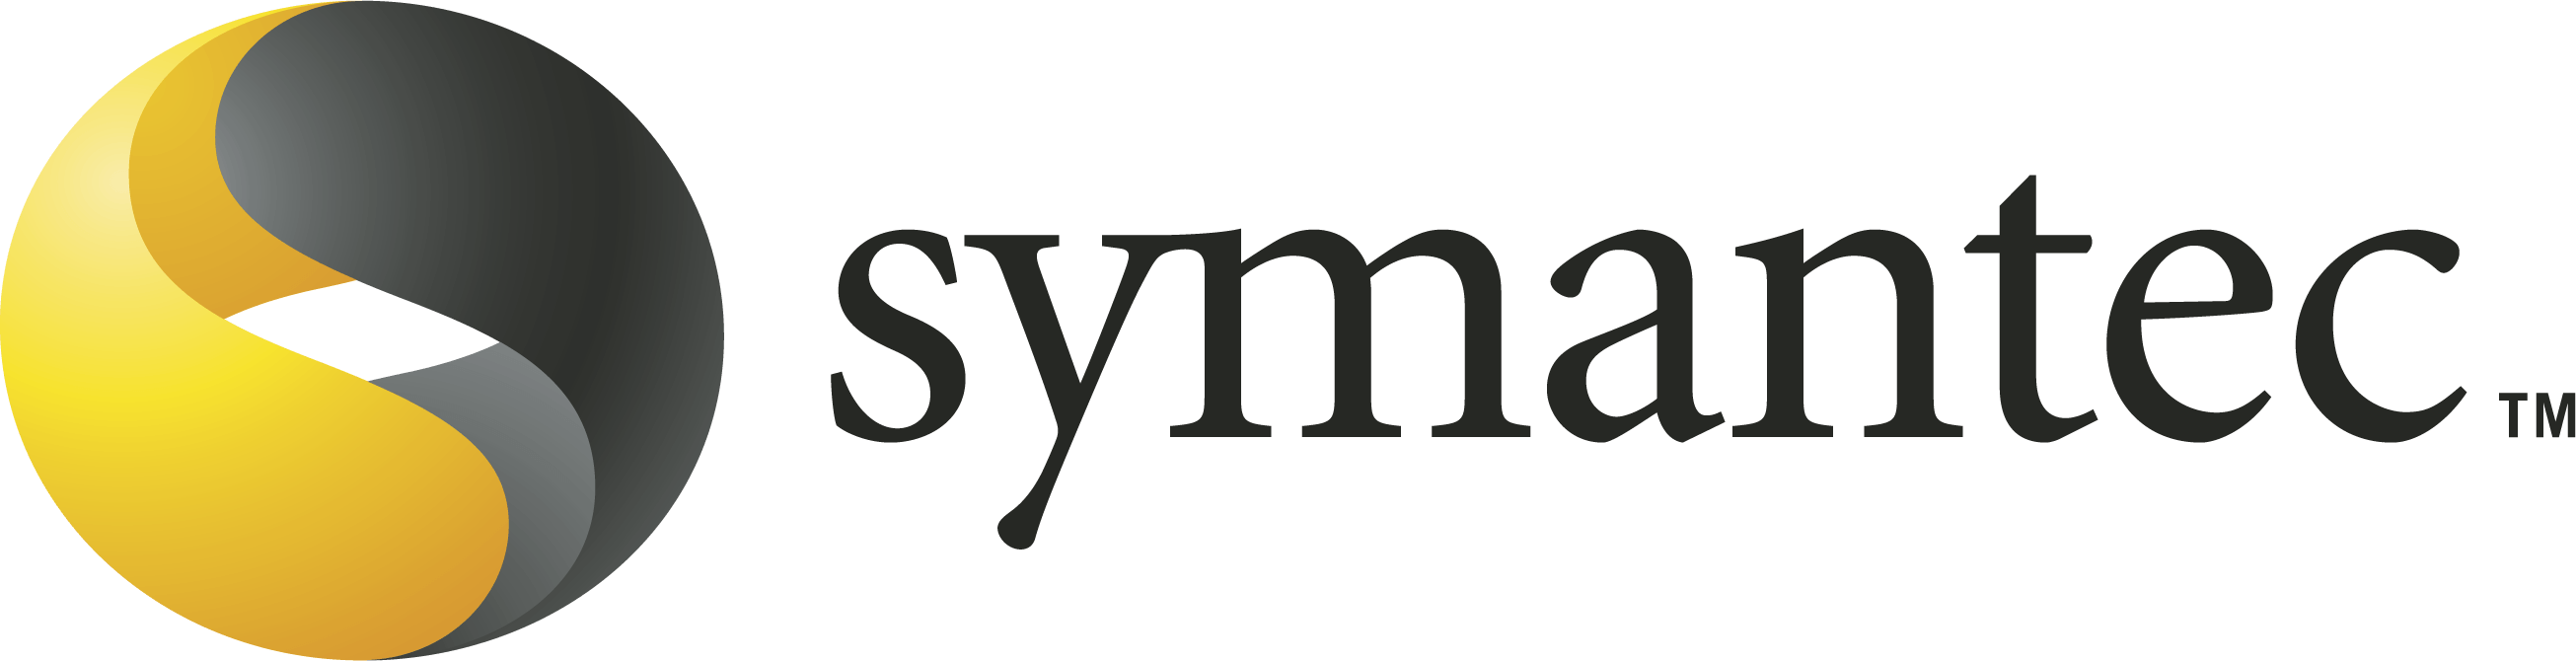 Symantec Corporation Logo - Symantec | Logopedia | FANDOM powered by Wikia